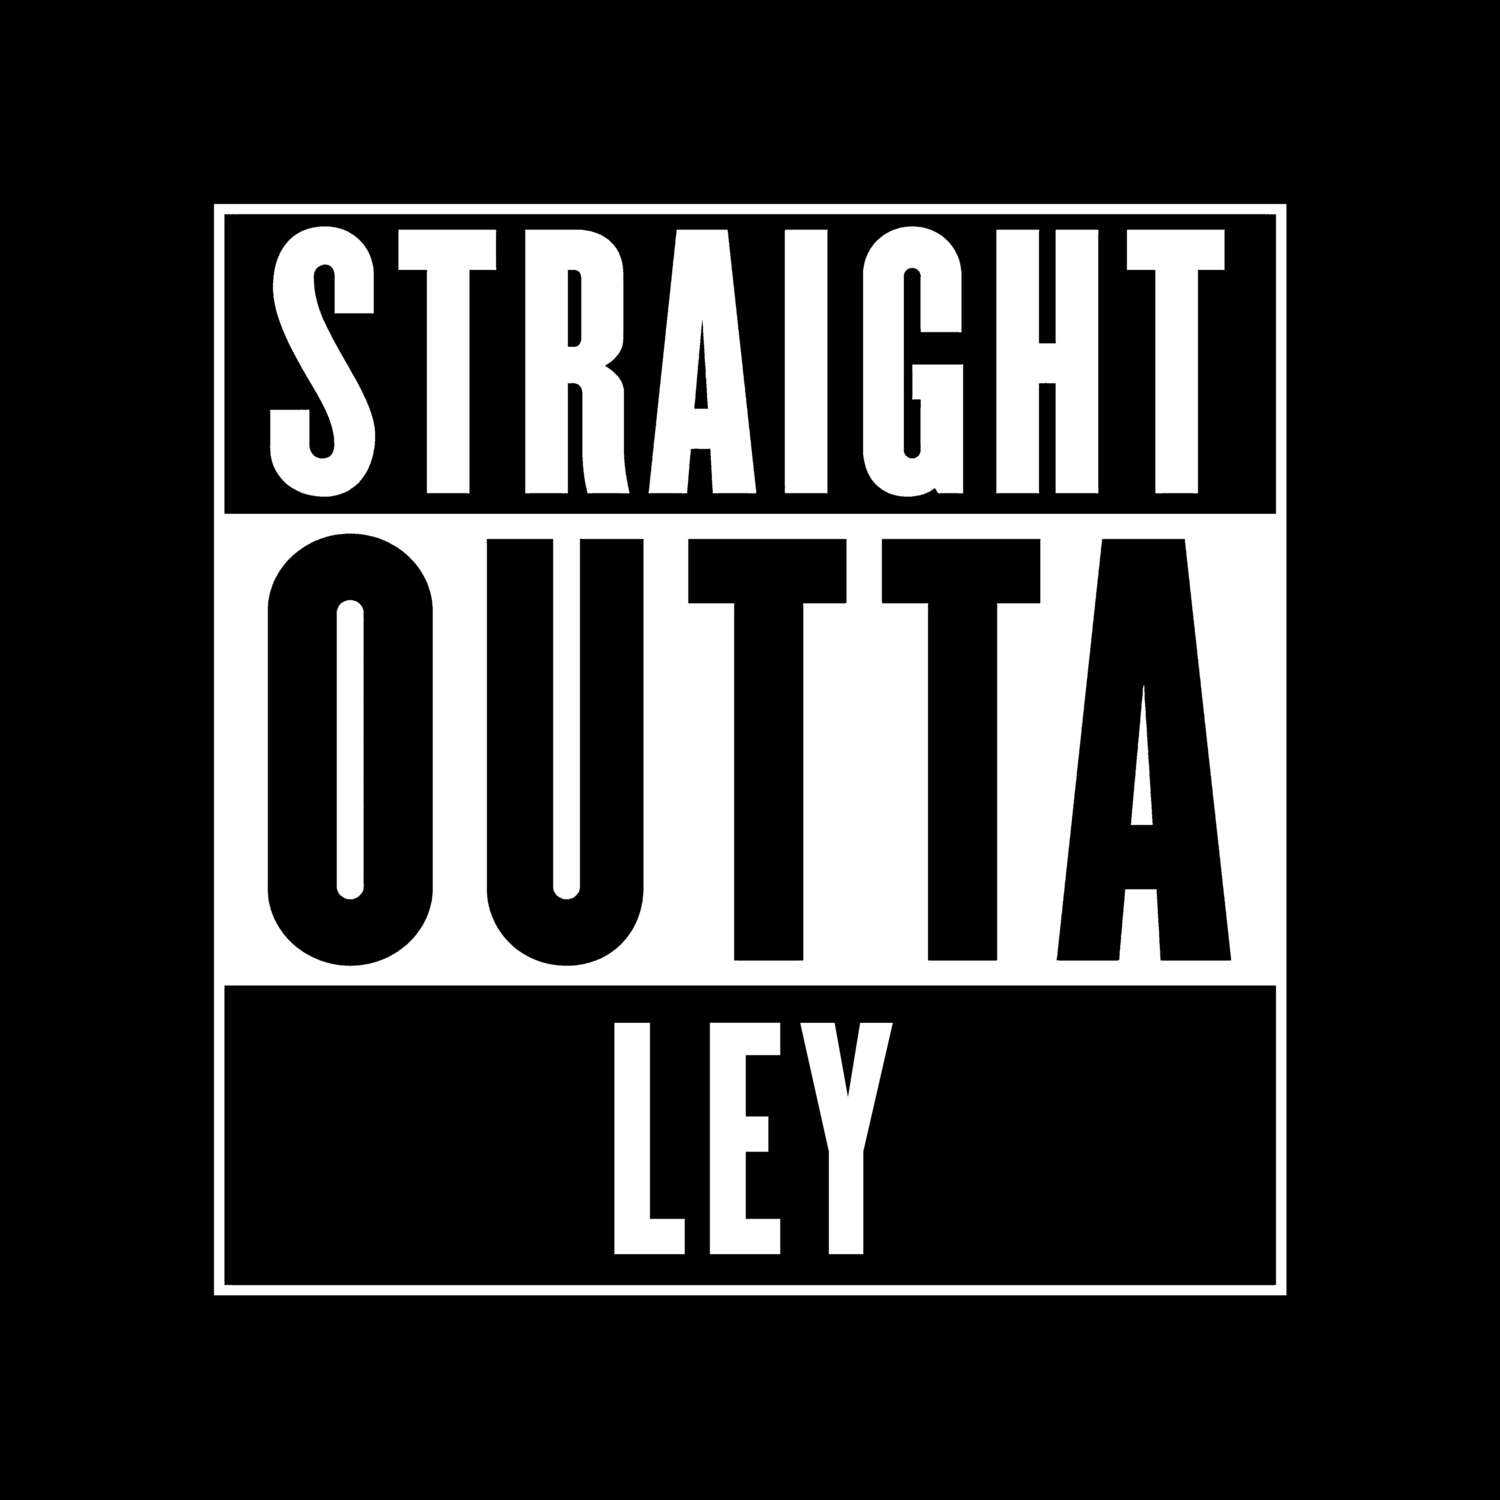 Ley T-Shirt »Straight Outta«